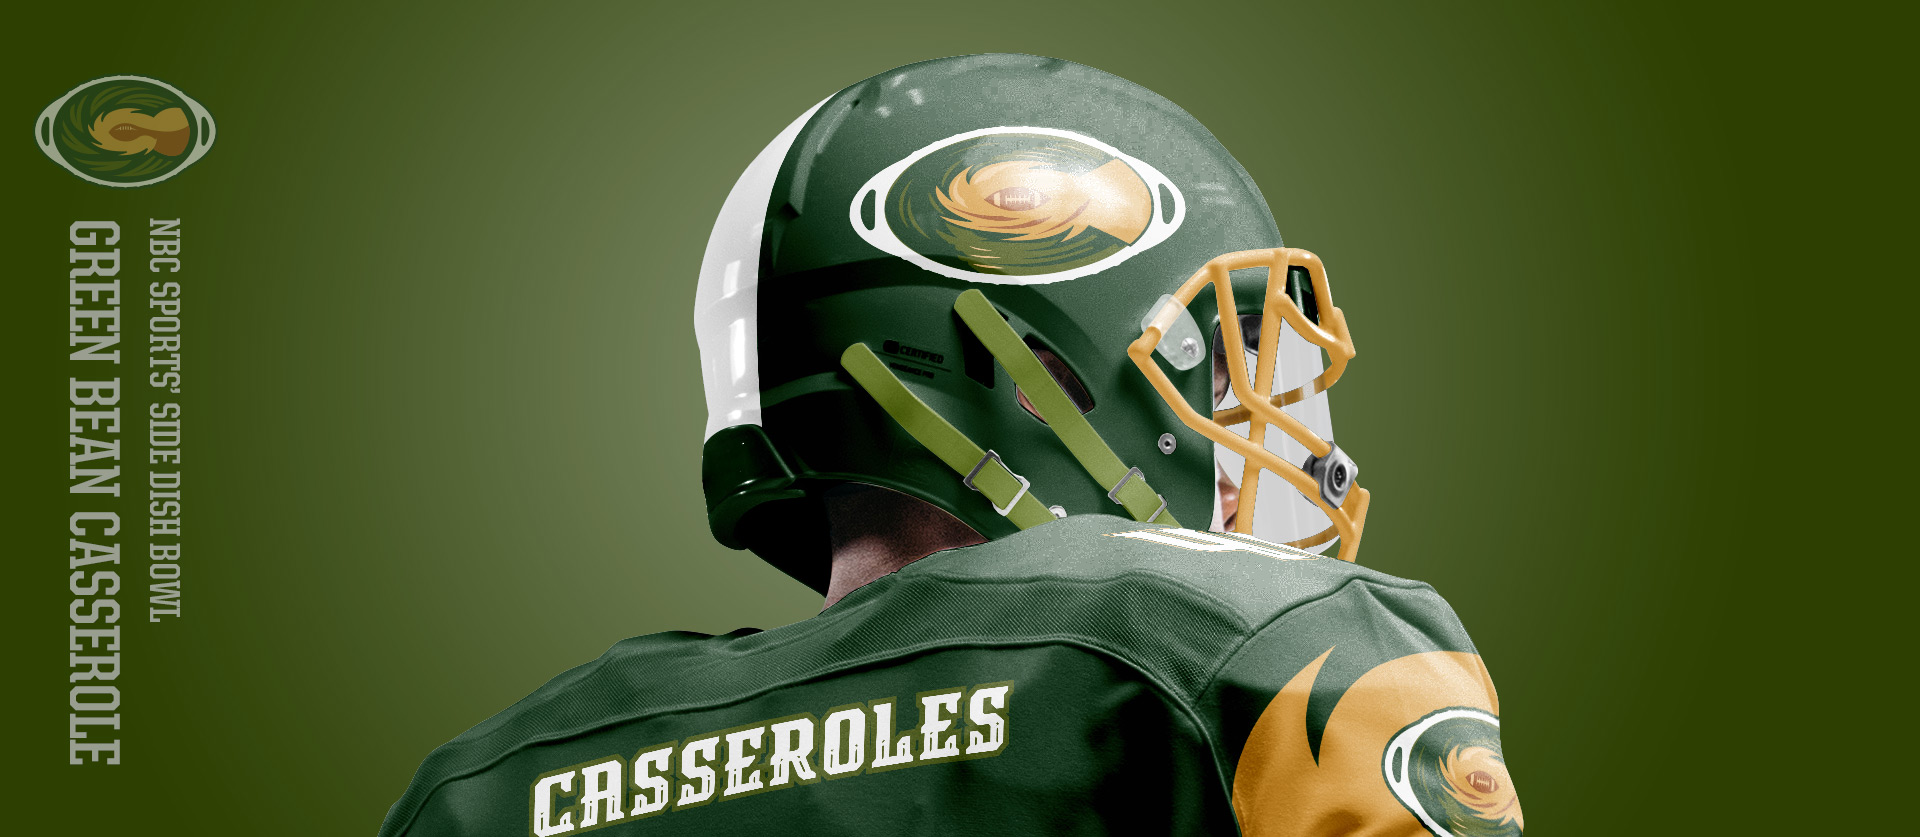 Green Bean Casseroles Helmet Backside - Football Uniform Design for NBC Sports Thanksgiving Side Dish Bowl